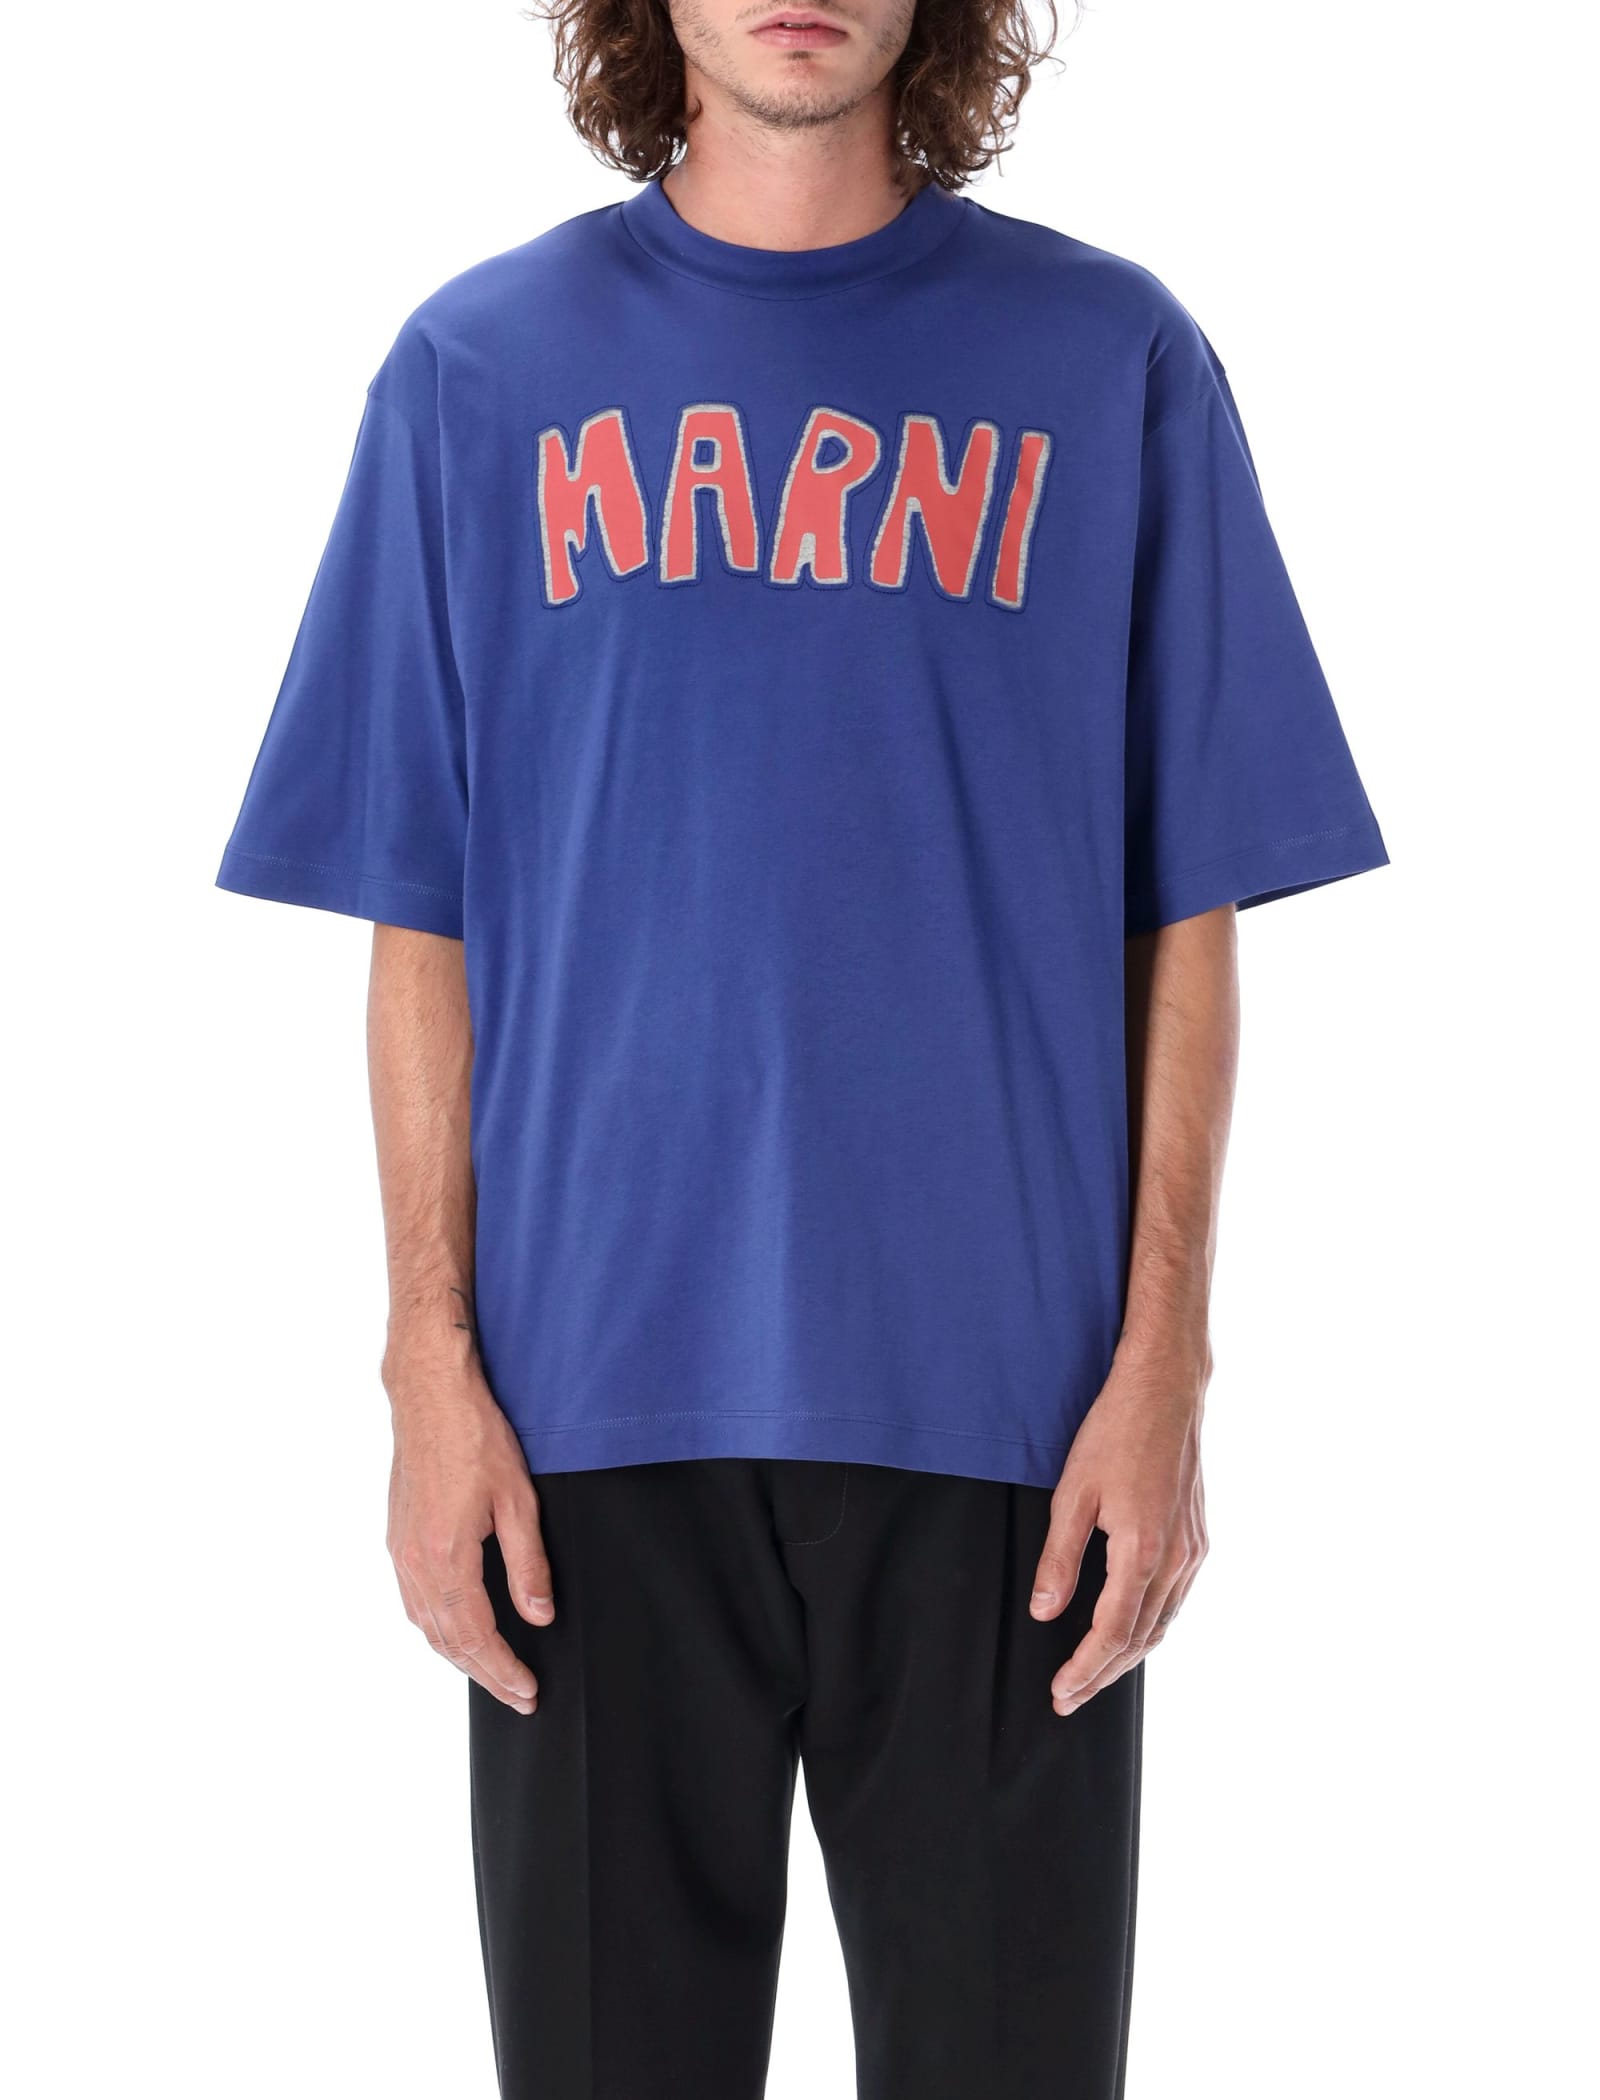 Marni Cut-out Logo T-shirt